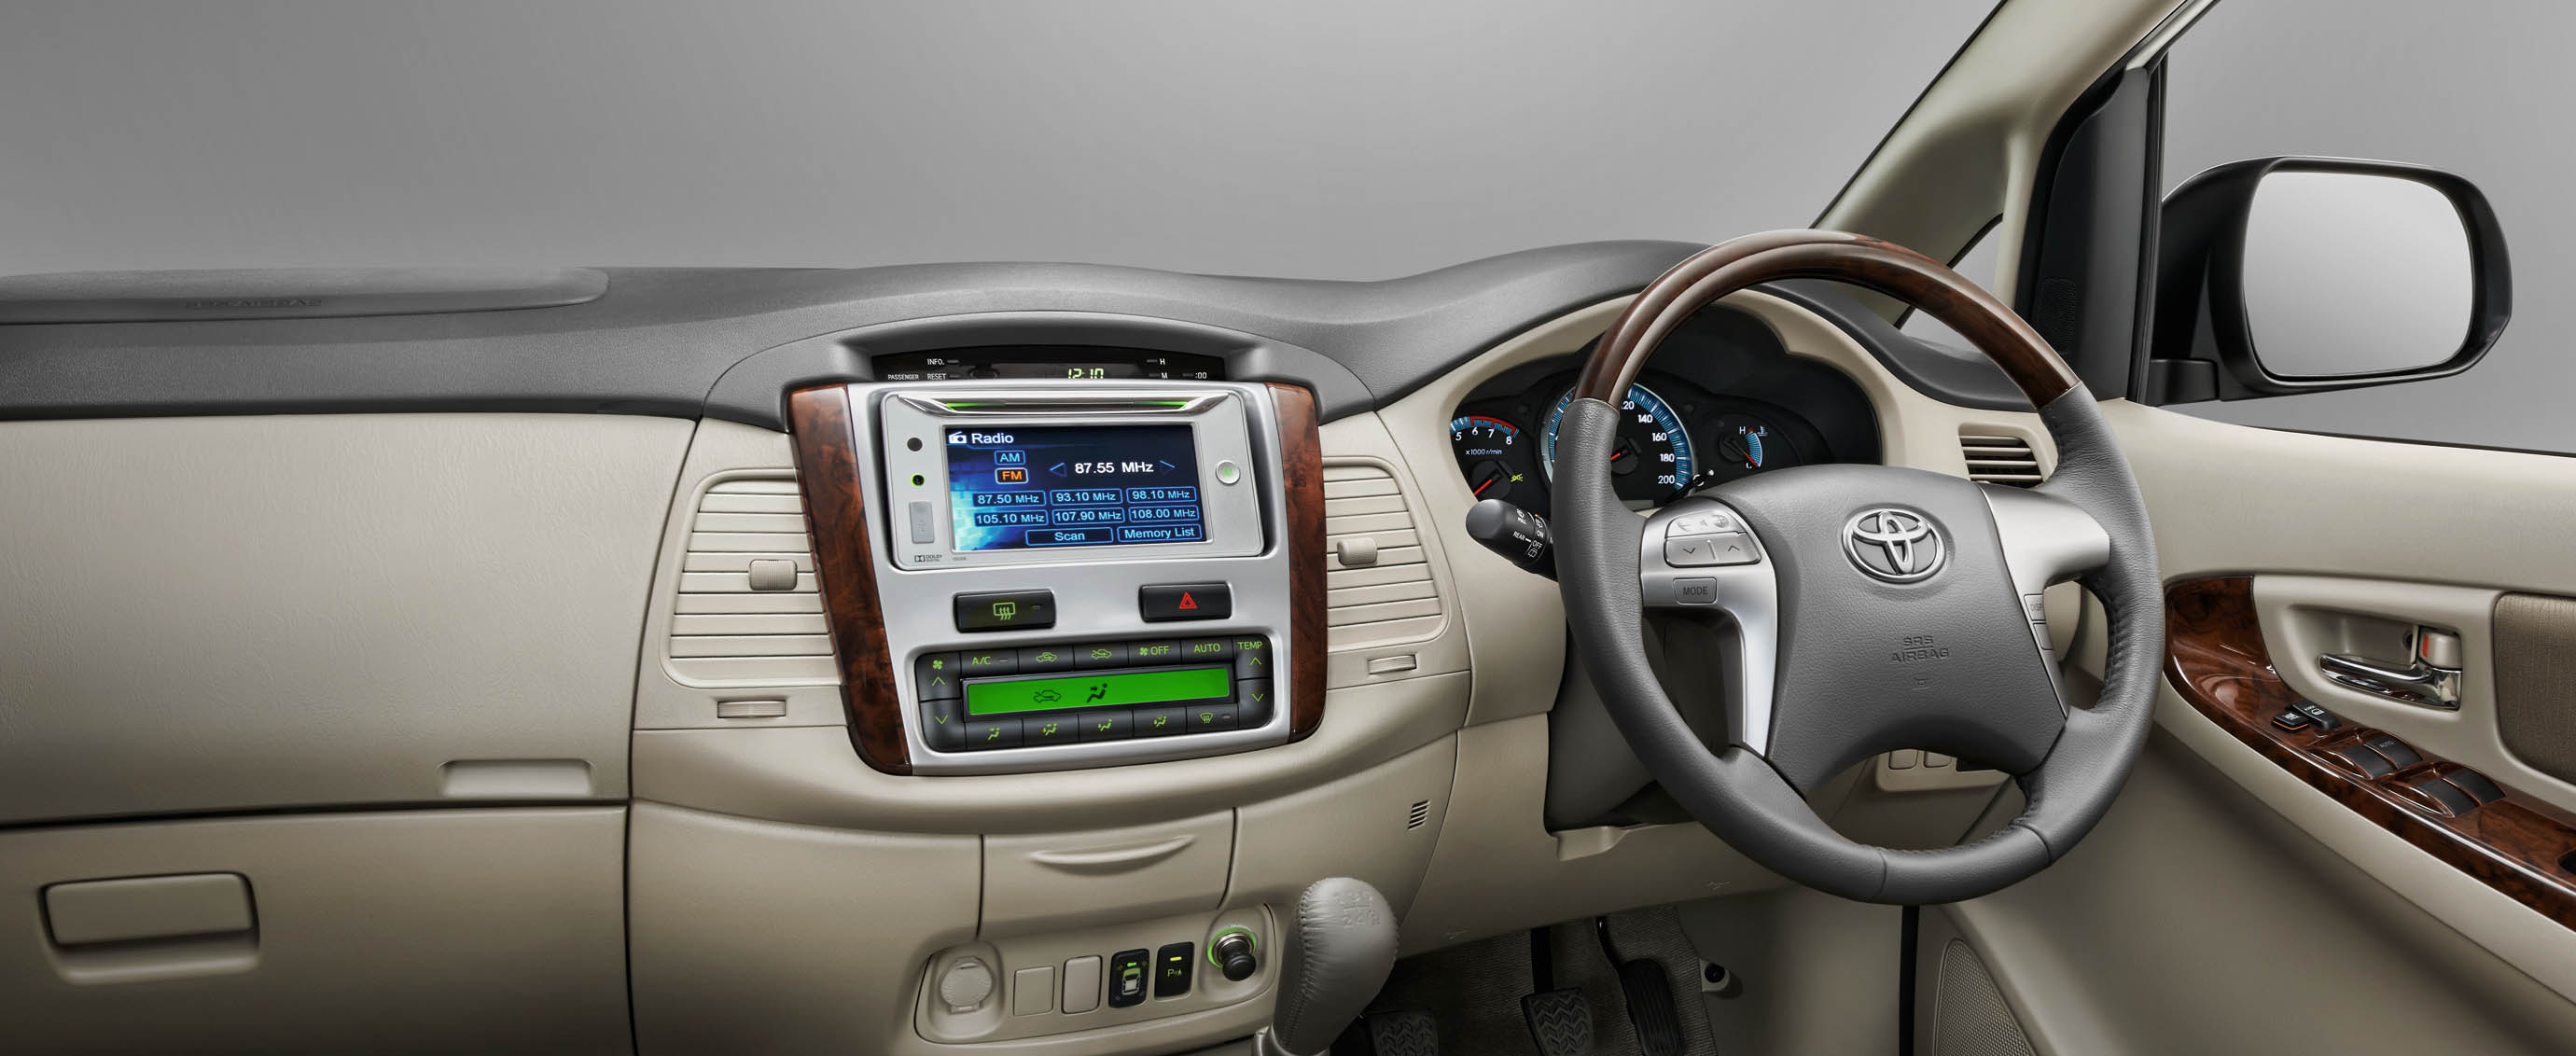 Toyota Kijang Innova  2013 dashboard tipe V AutonetMagz 